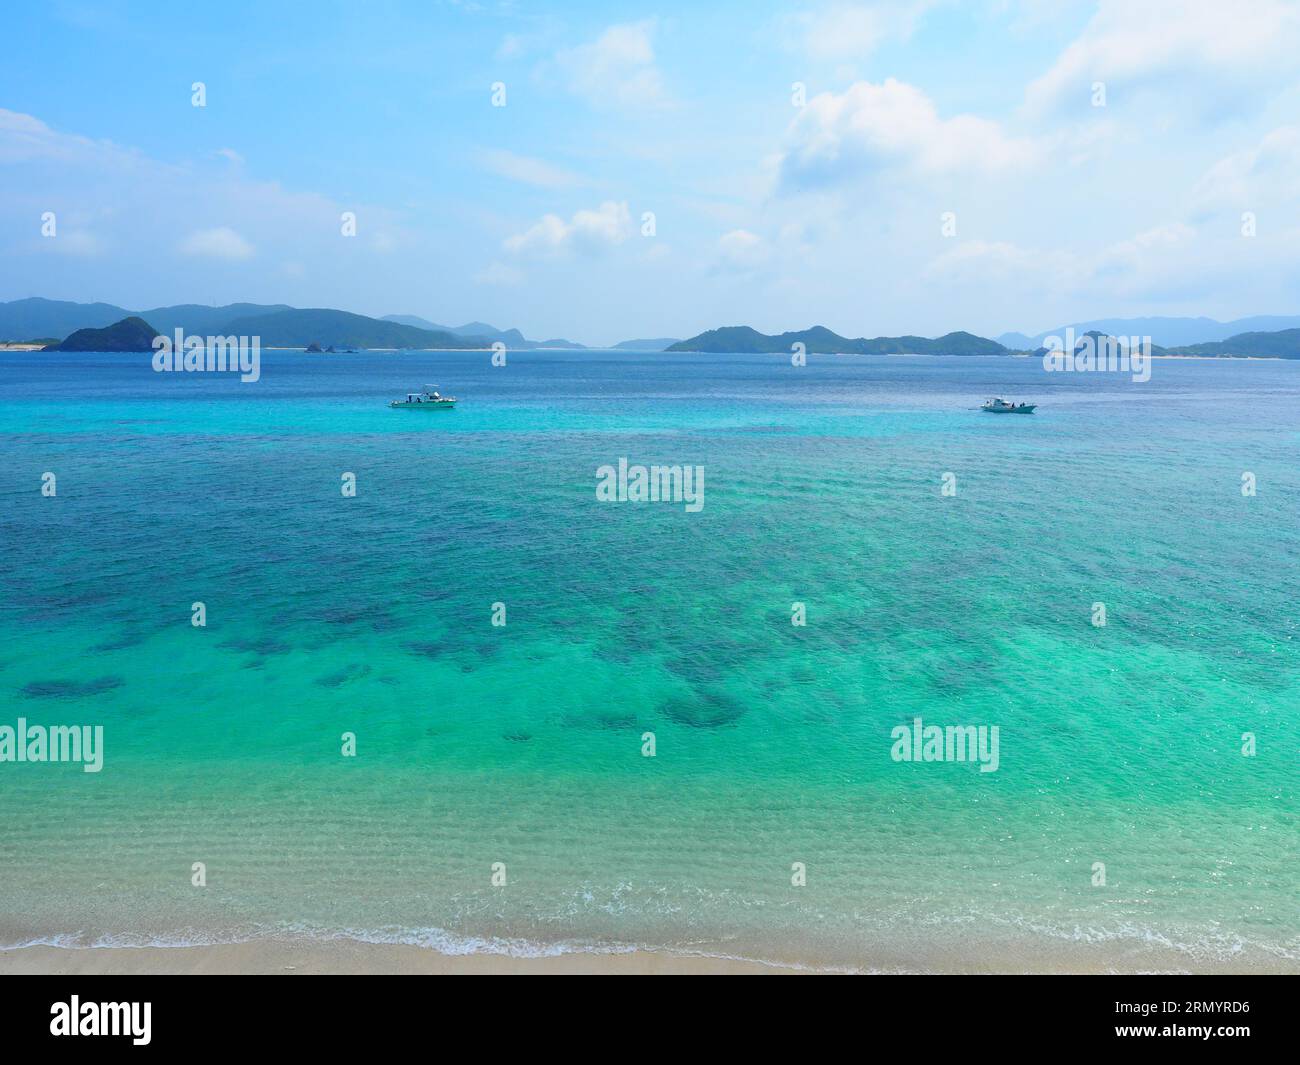 Kerama-Inseln, Nationalpark, Okinawa, Japan - Blaue Zonen Stockfoto